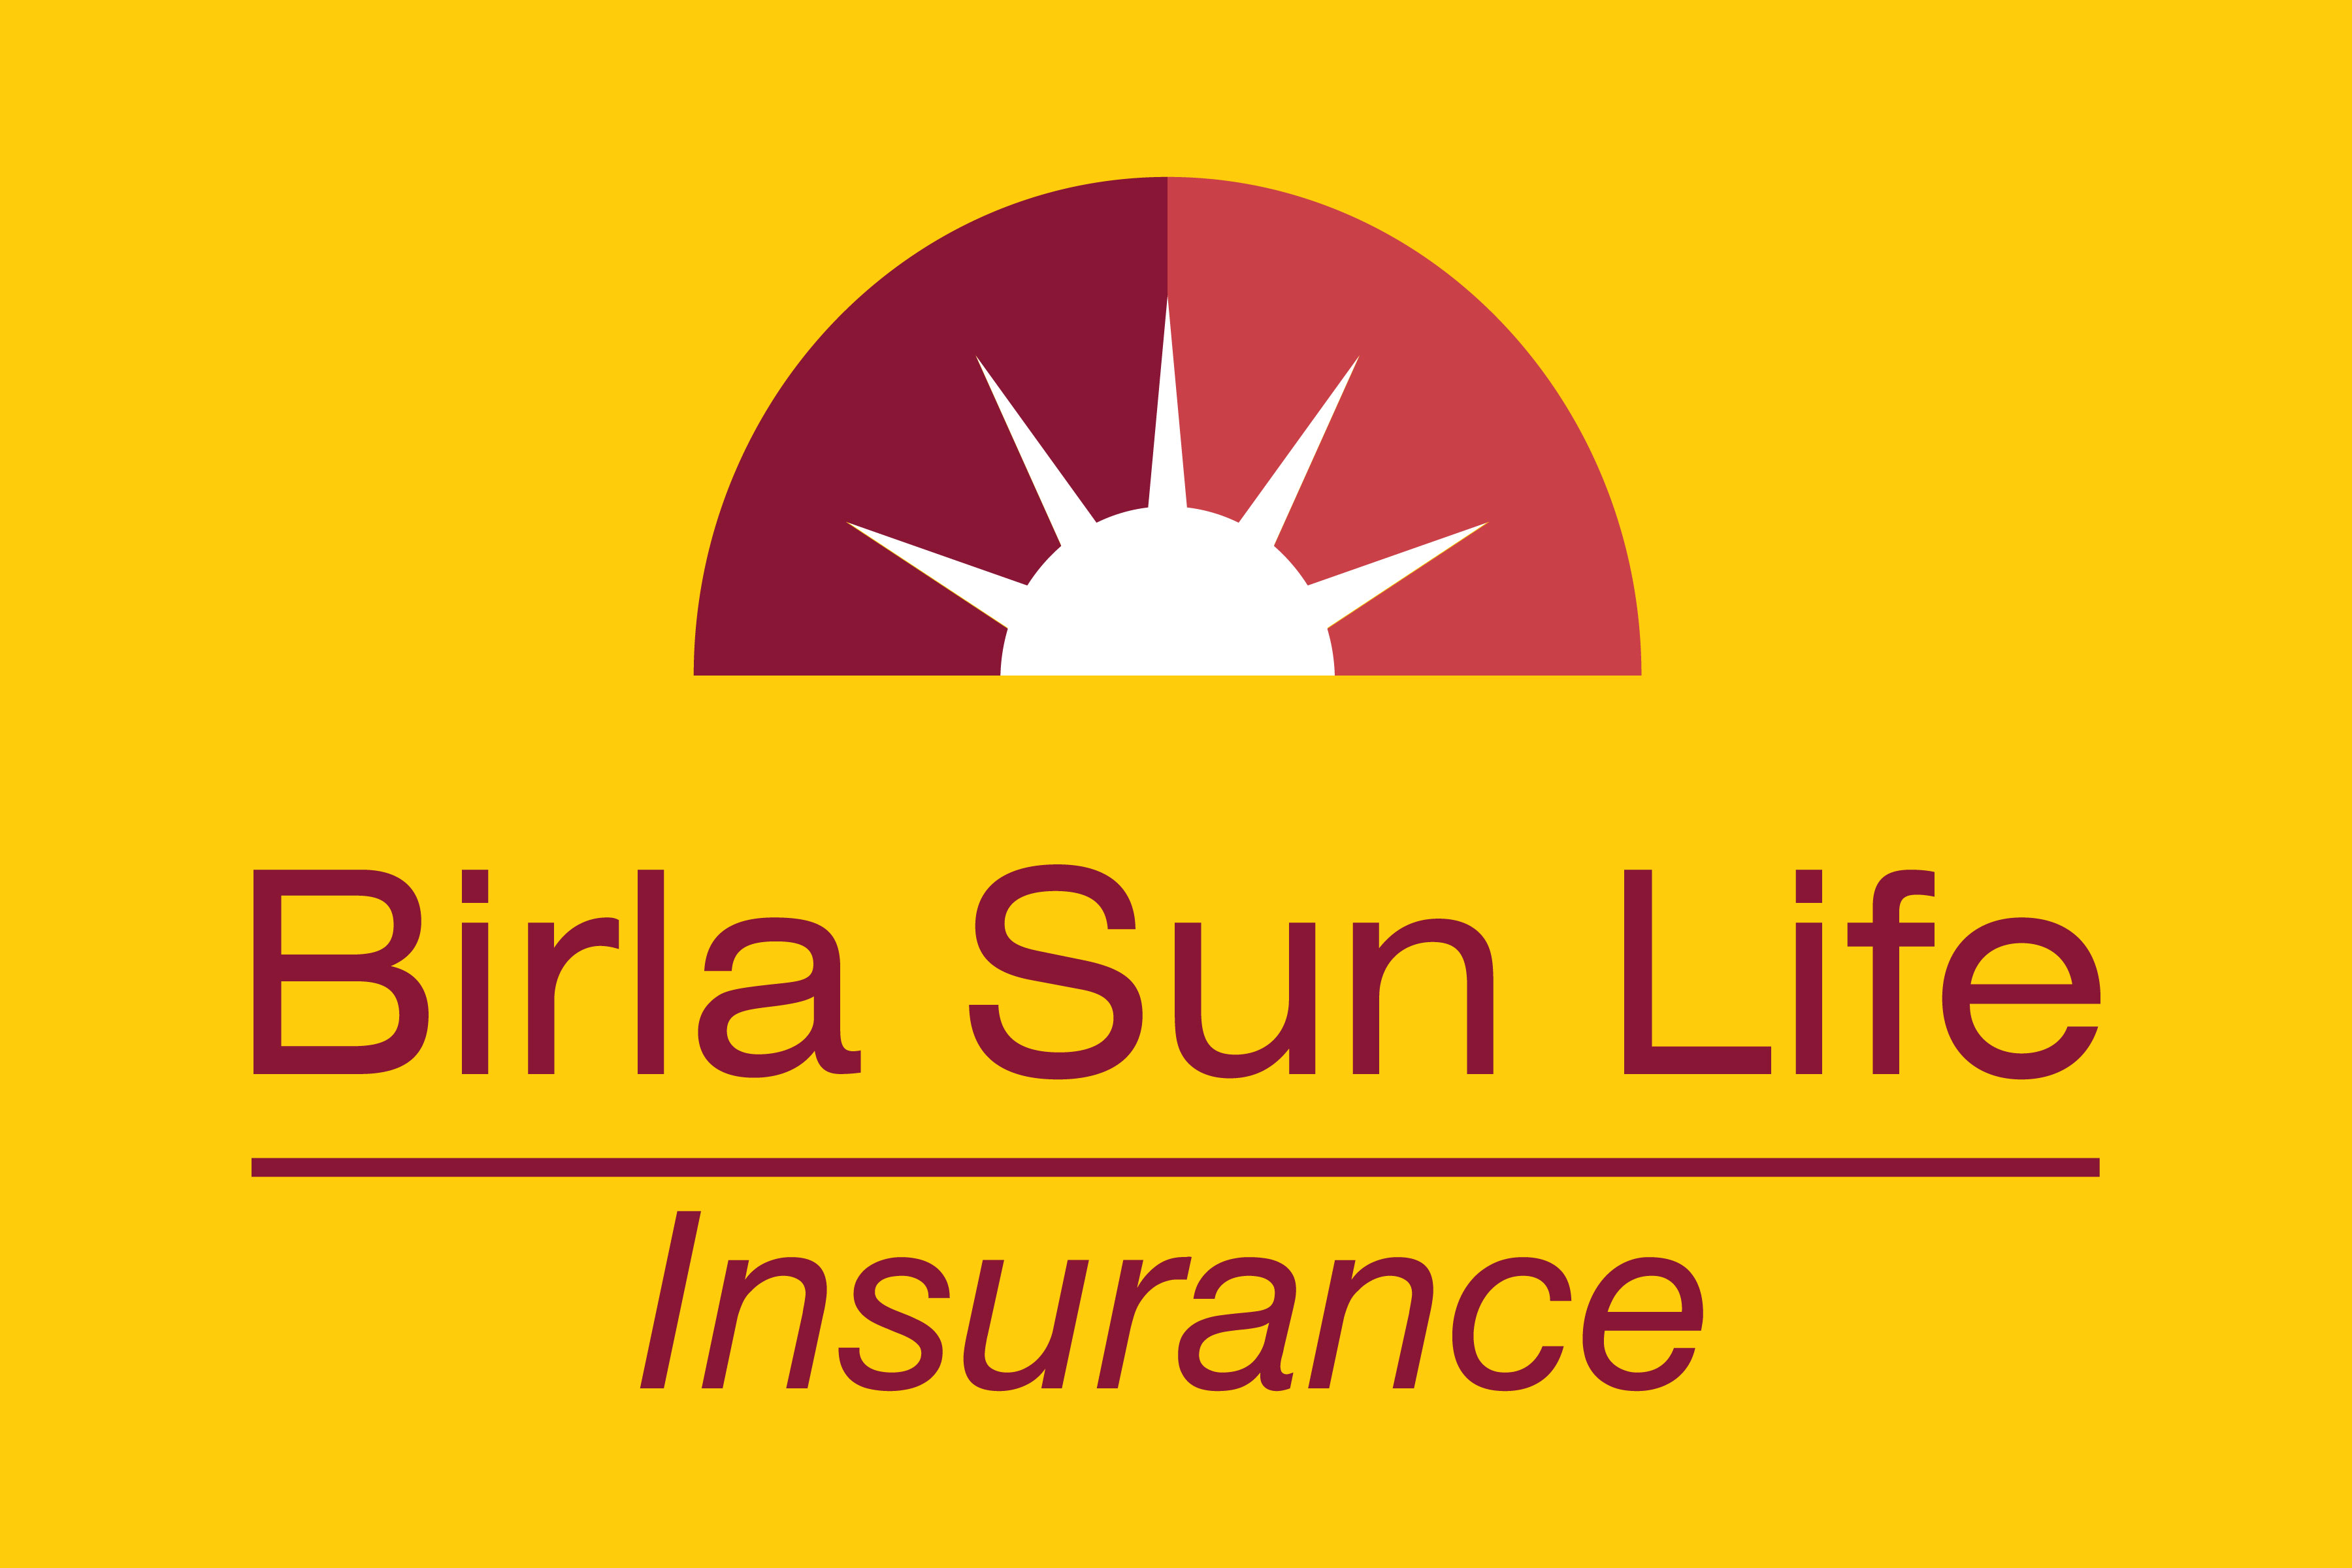 Birla Sun Life Insurance Launches Insurance Chatbot to Address Customer Queries